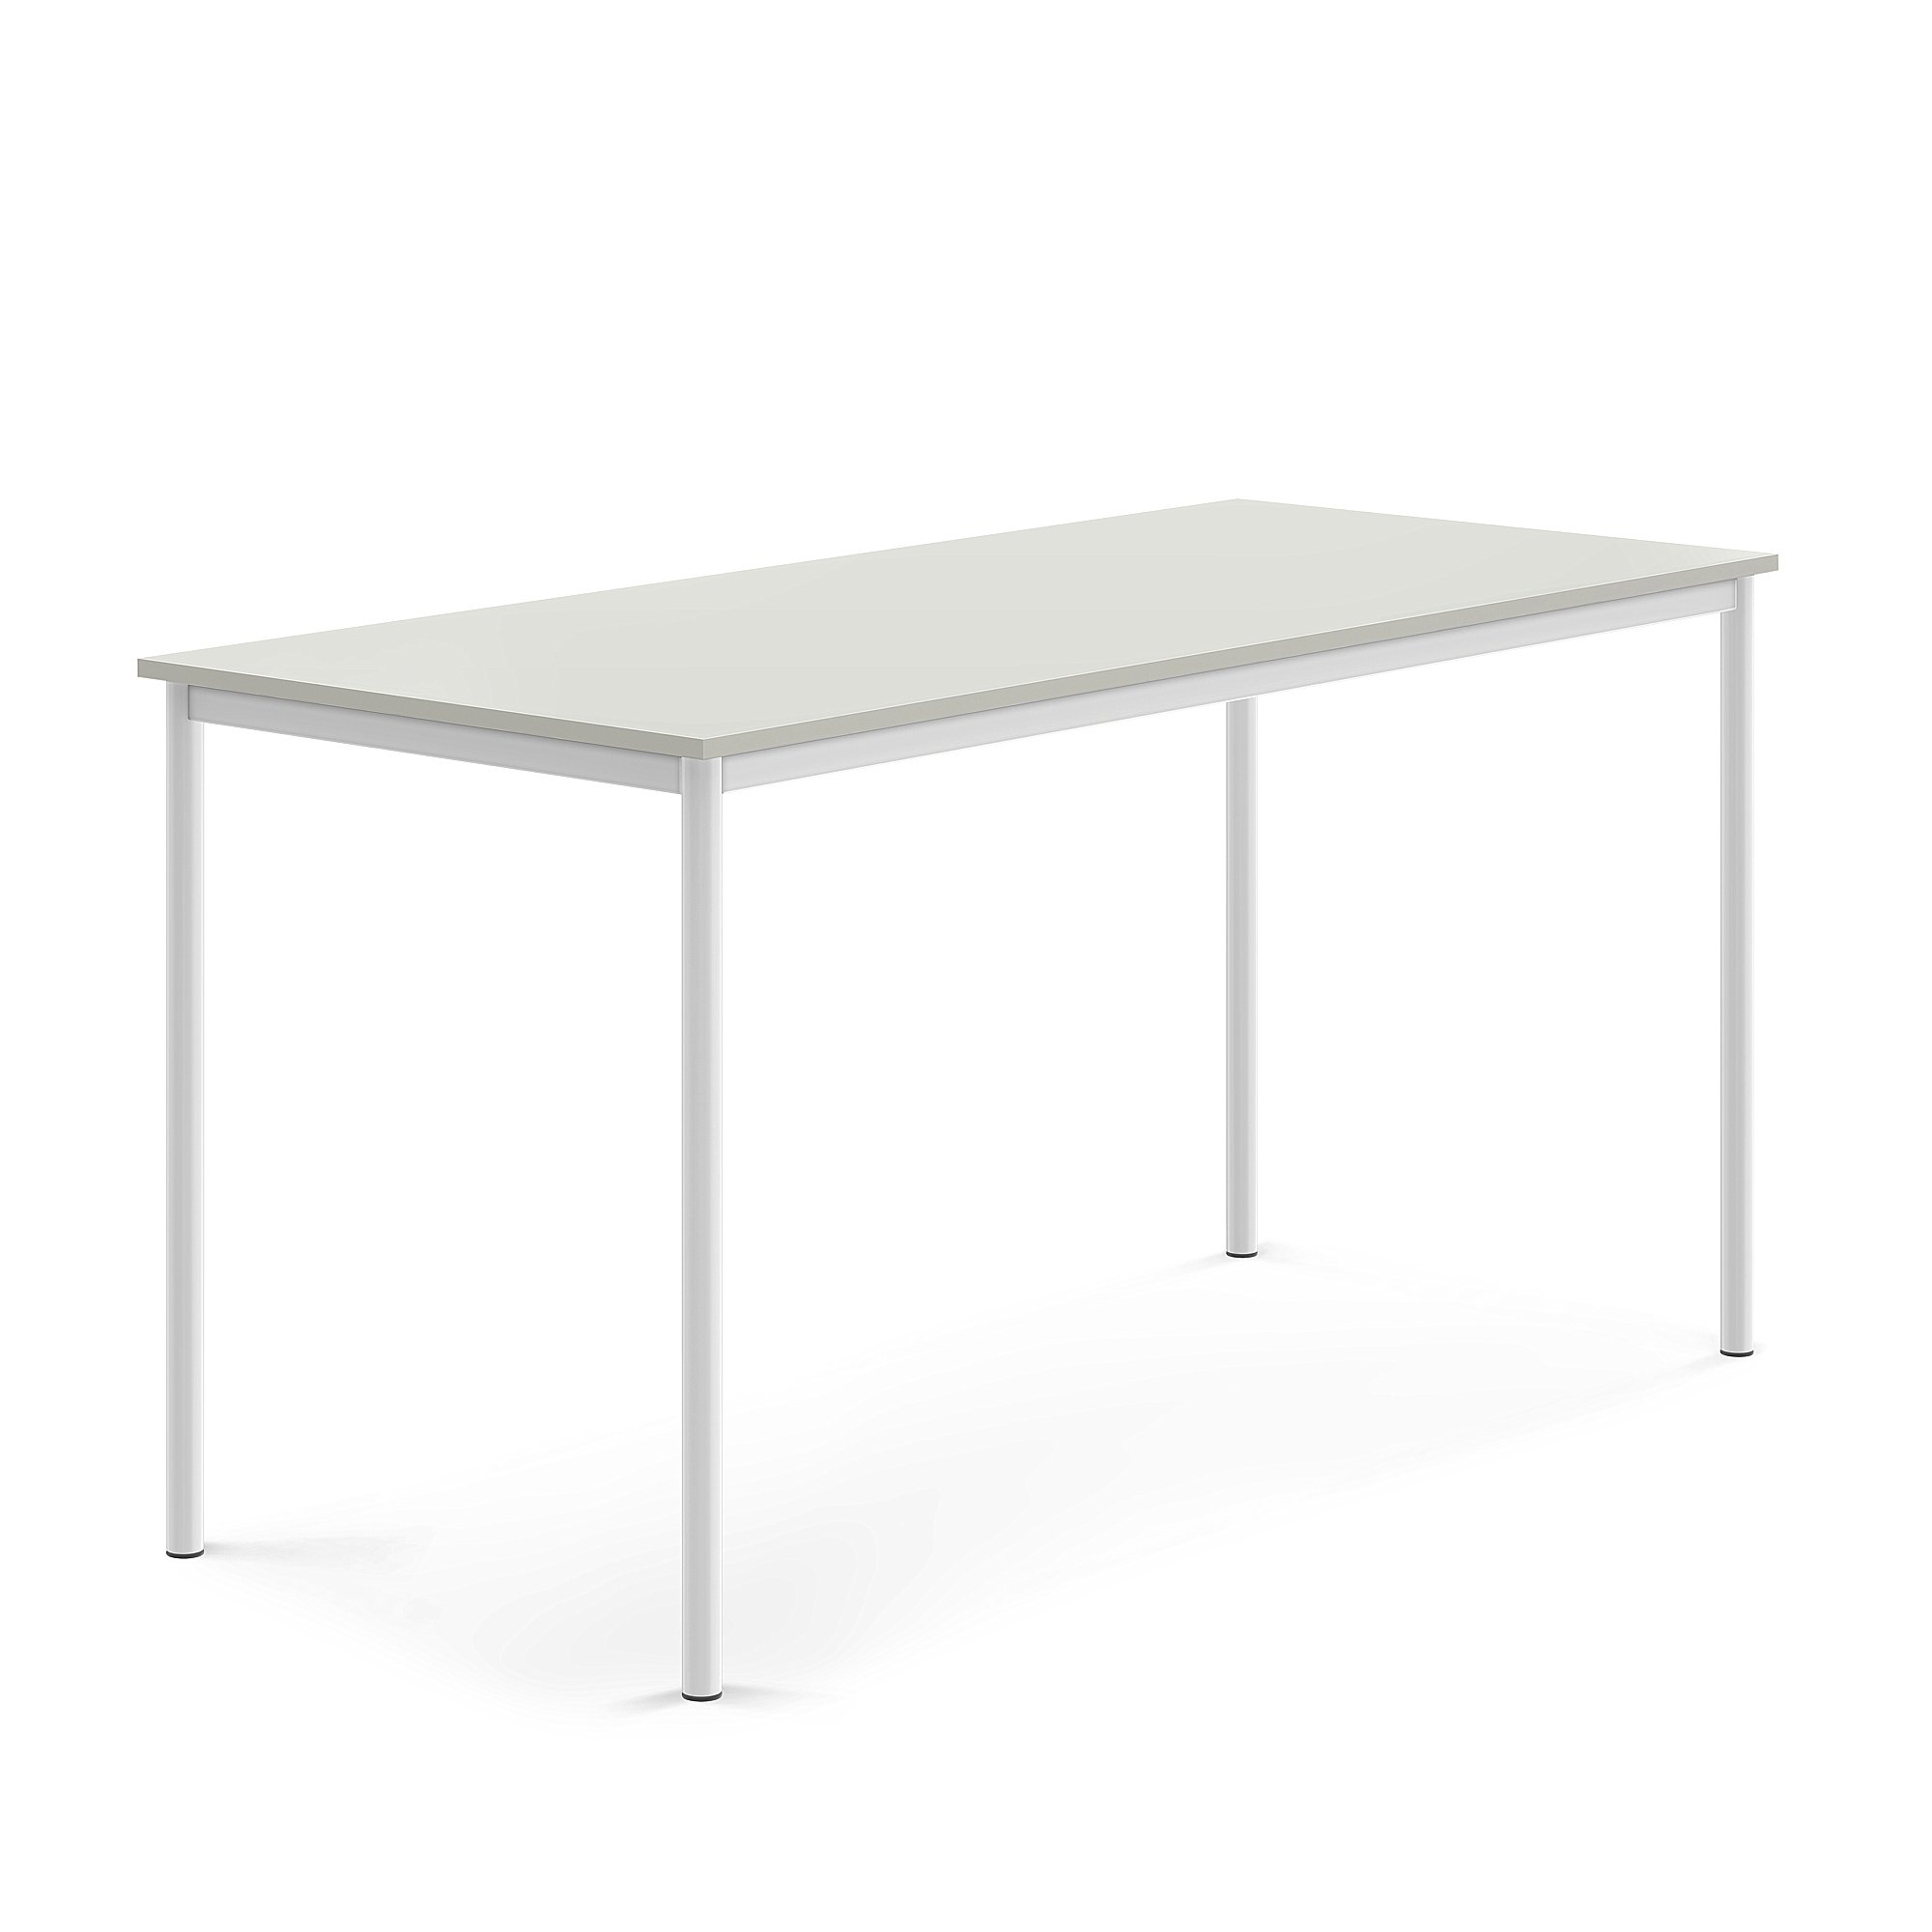 Stůl SONITUS, 1800x800x900 mm, bílé nohy, HPL deska tlumící hluk, šedá